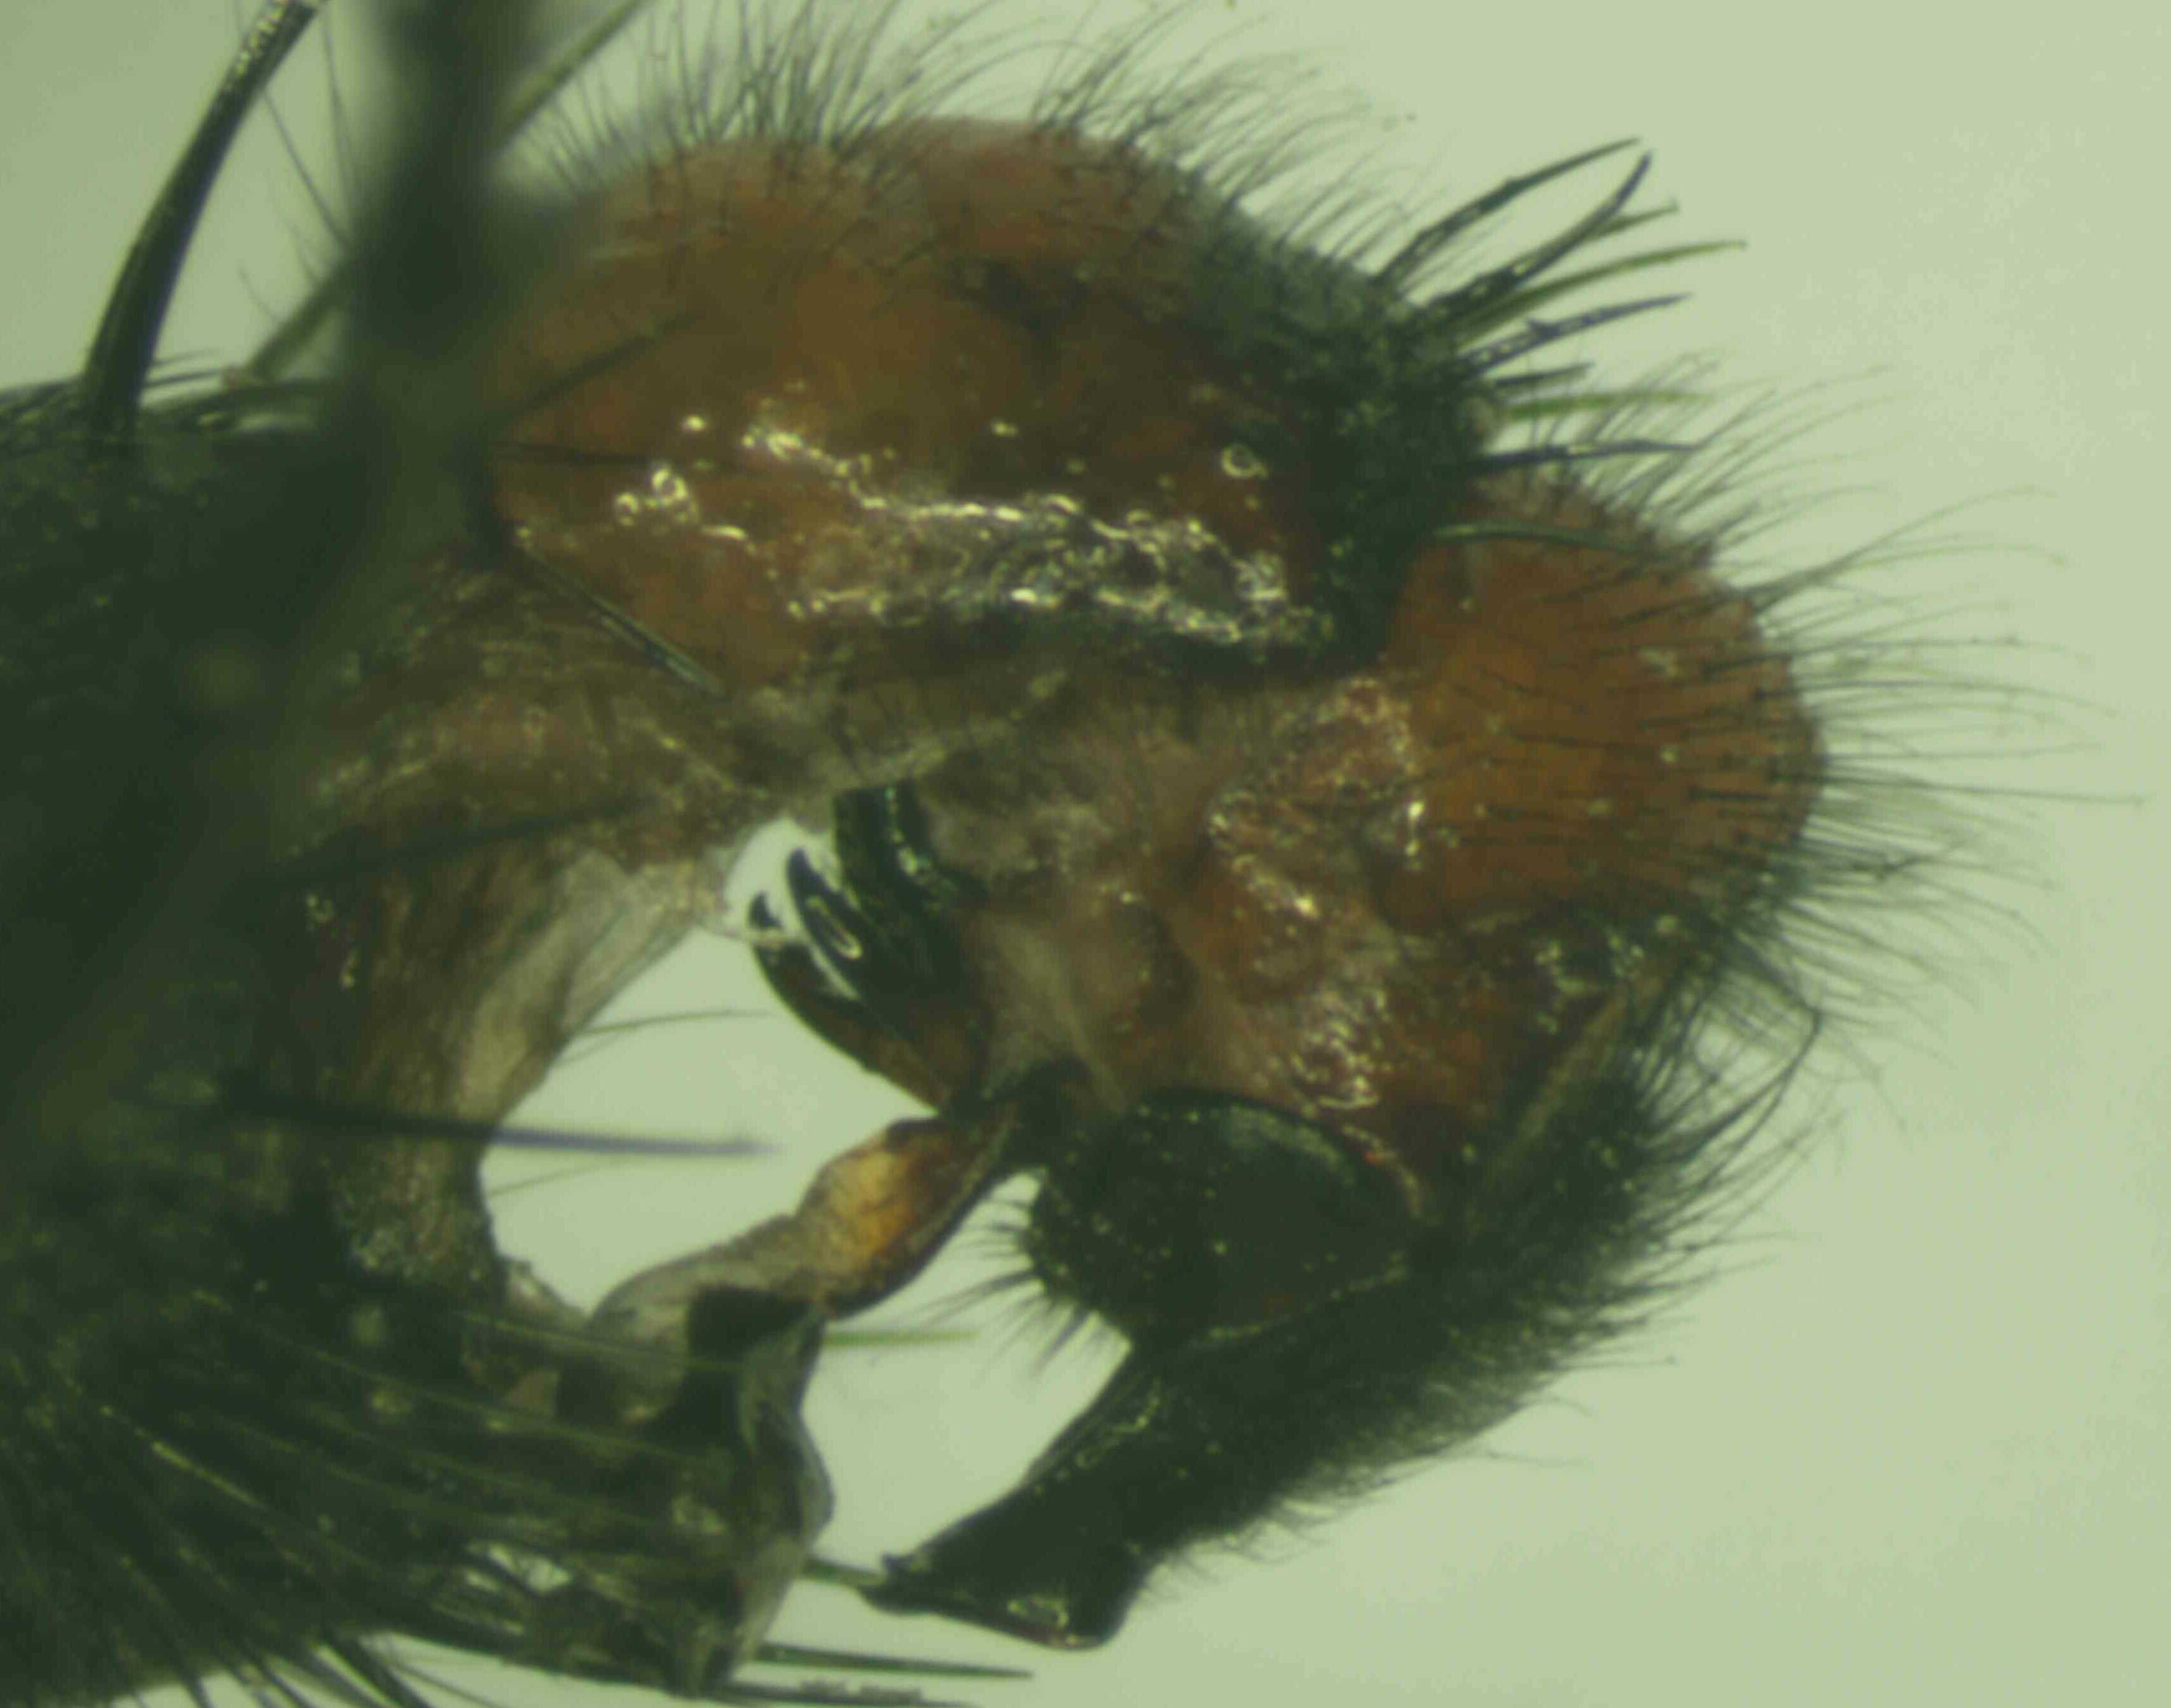 Male genitaria of Parasarcophaga crassipalpis